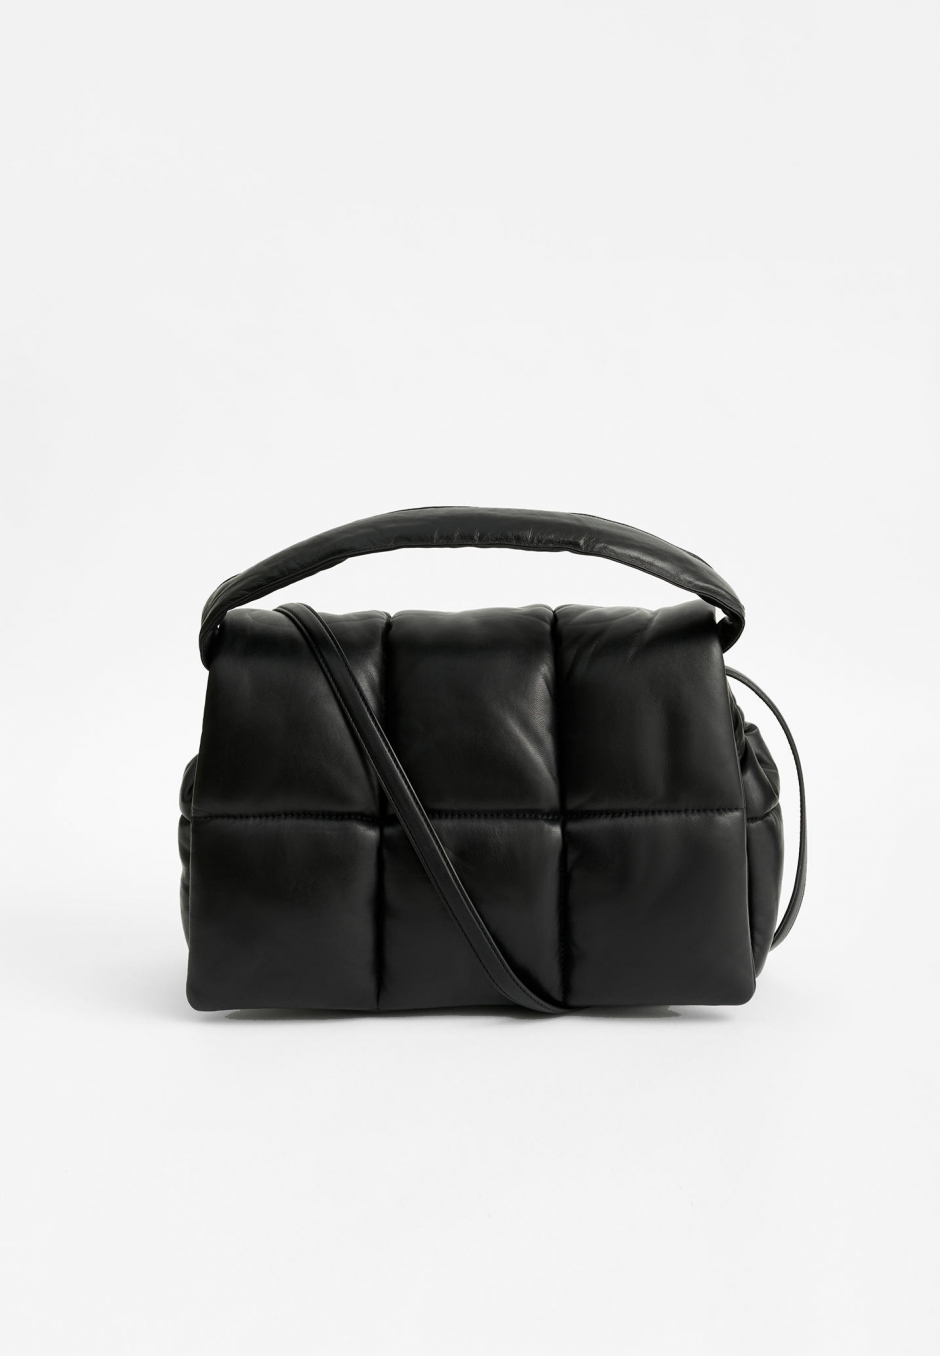 Stand Studio Wanda Leather Clutch Bag